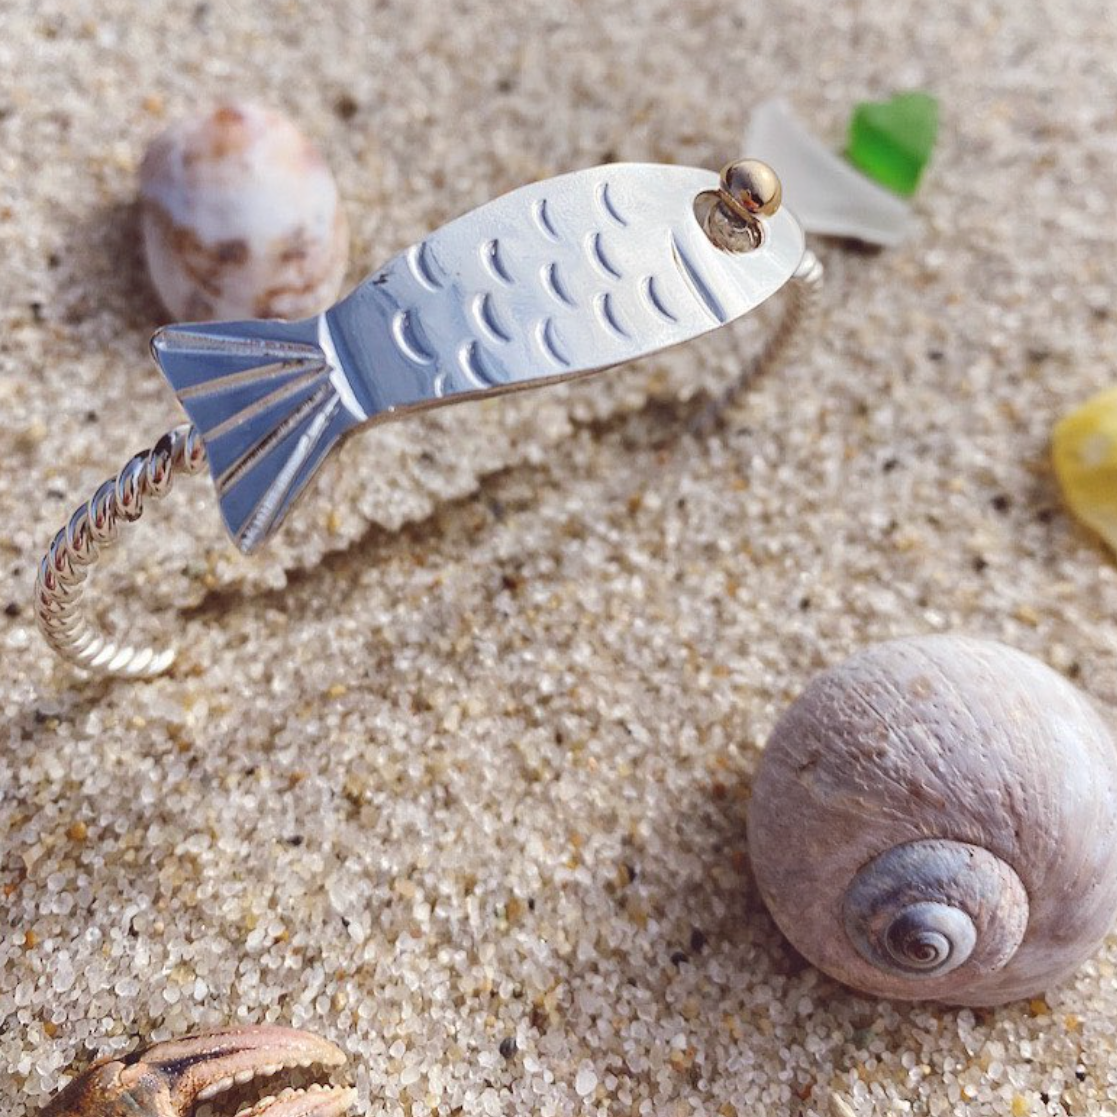 Twisted Fish Hook Bracelet – Cape Cod Jewelers